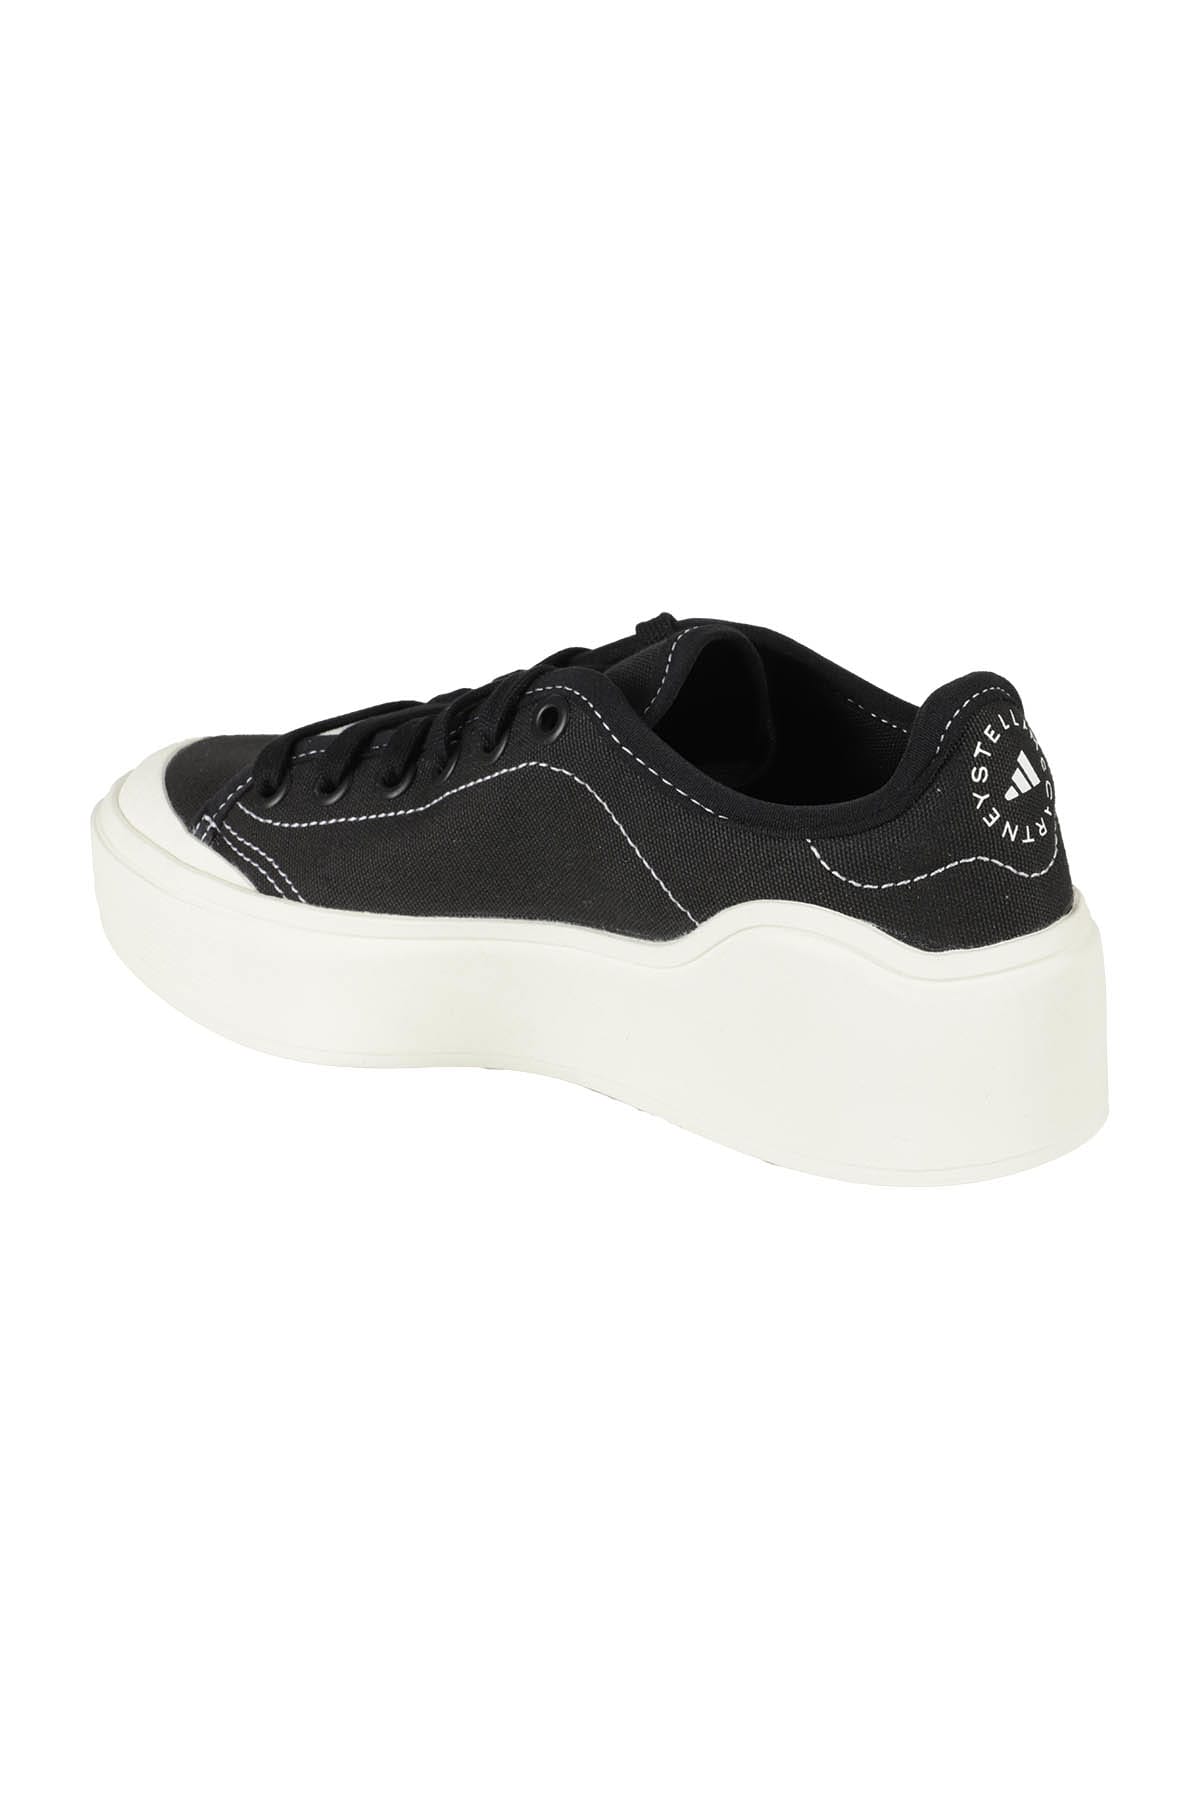 Shop Adidas By Stella Mccartney Asmc Court Cotton In Black White